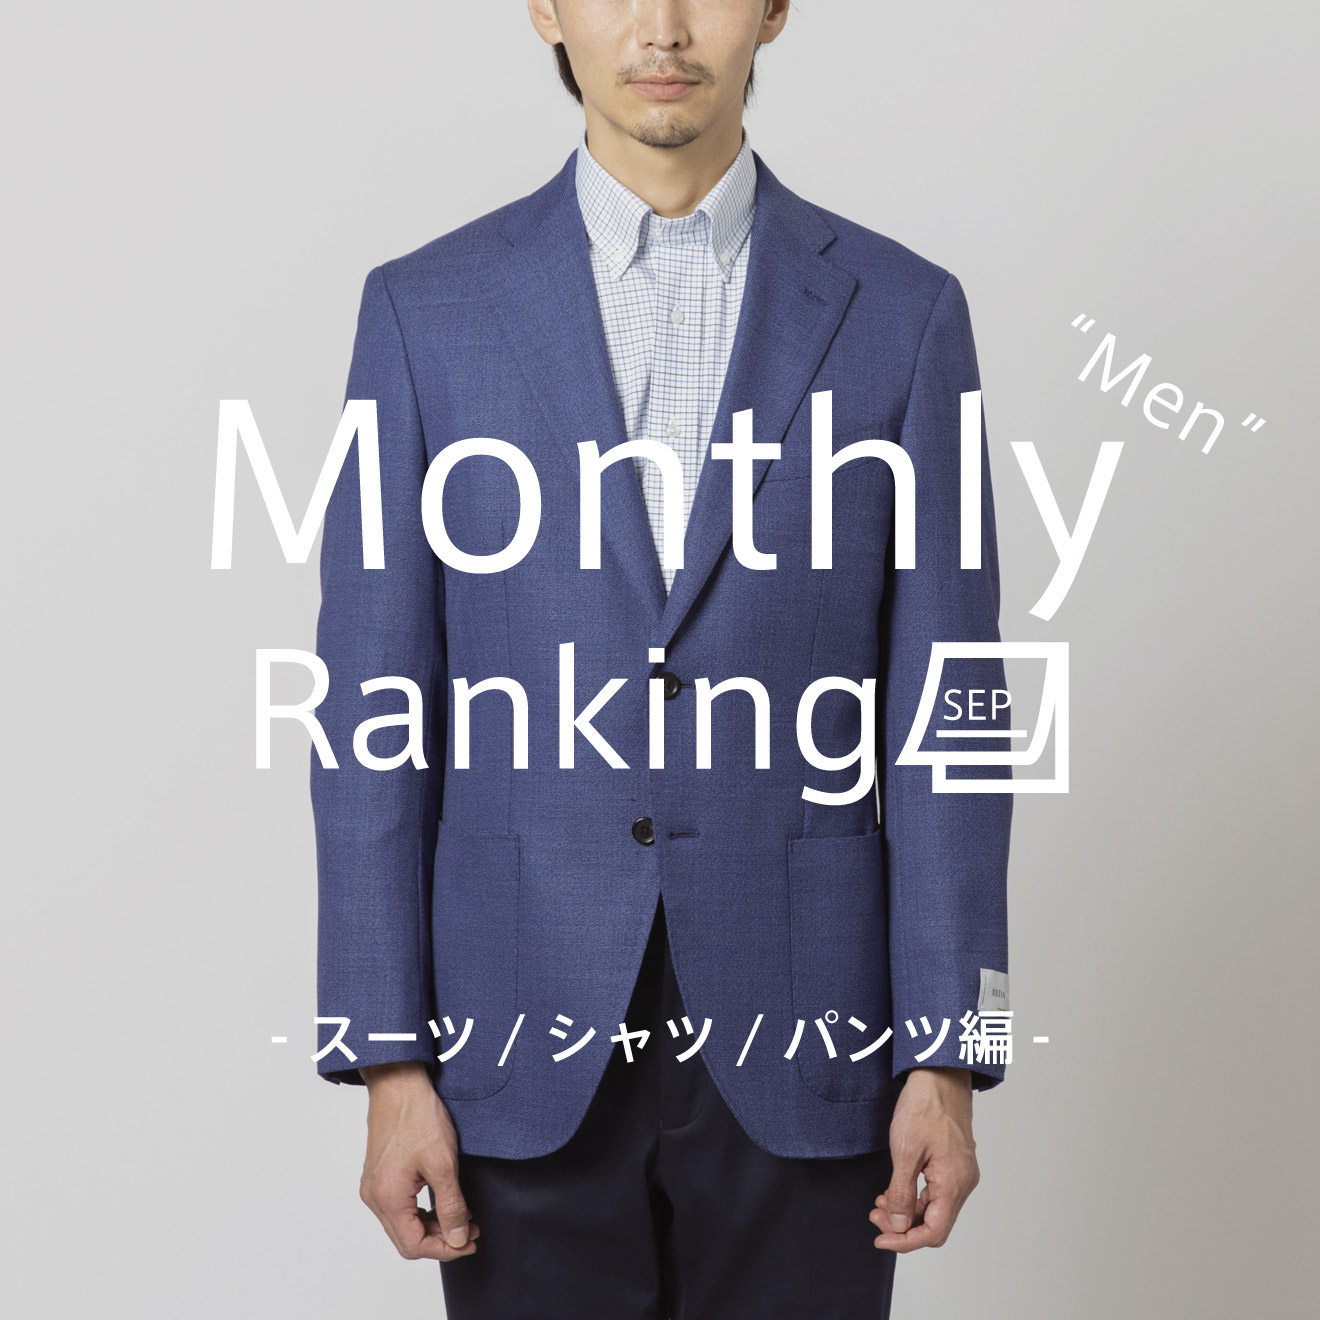 Monthly Ranking -SEP- スーツ / シャツ / パンツ編